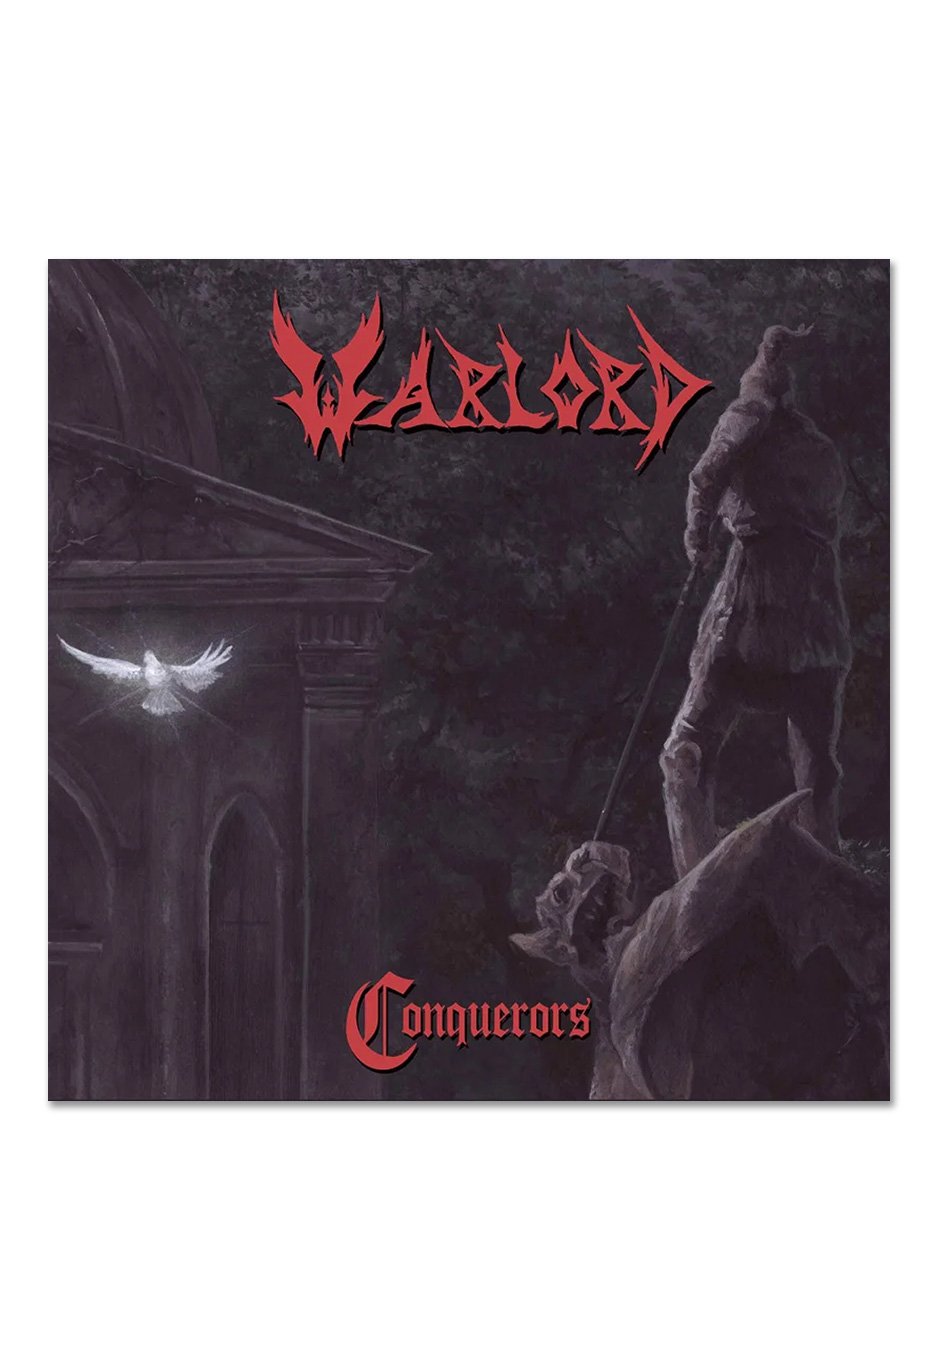 Warlord - Conquerors / The Watchman Ltd. Purple - Colored Single Vinyl